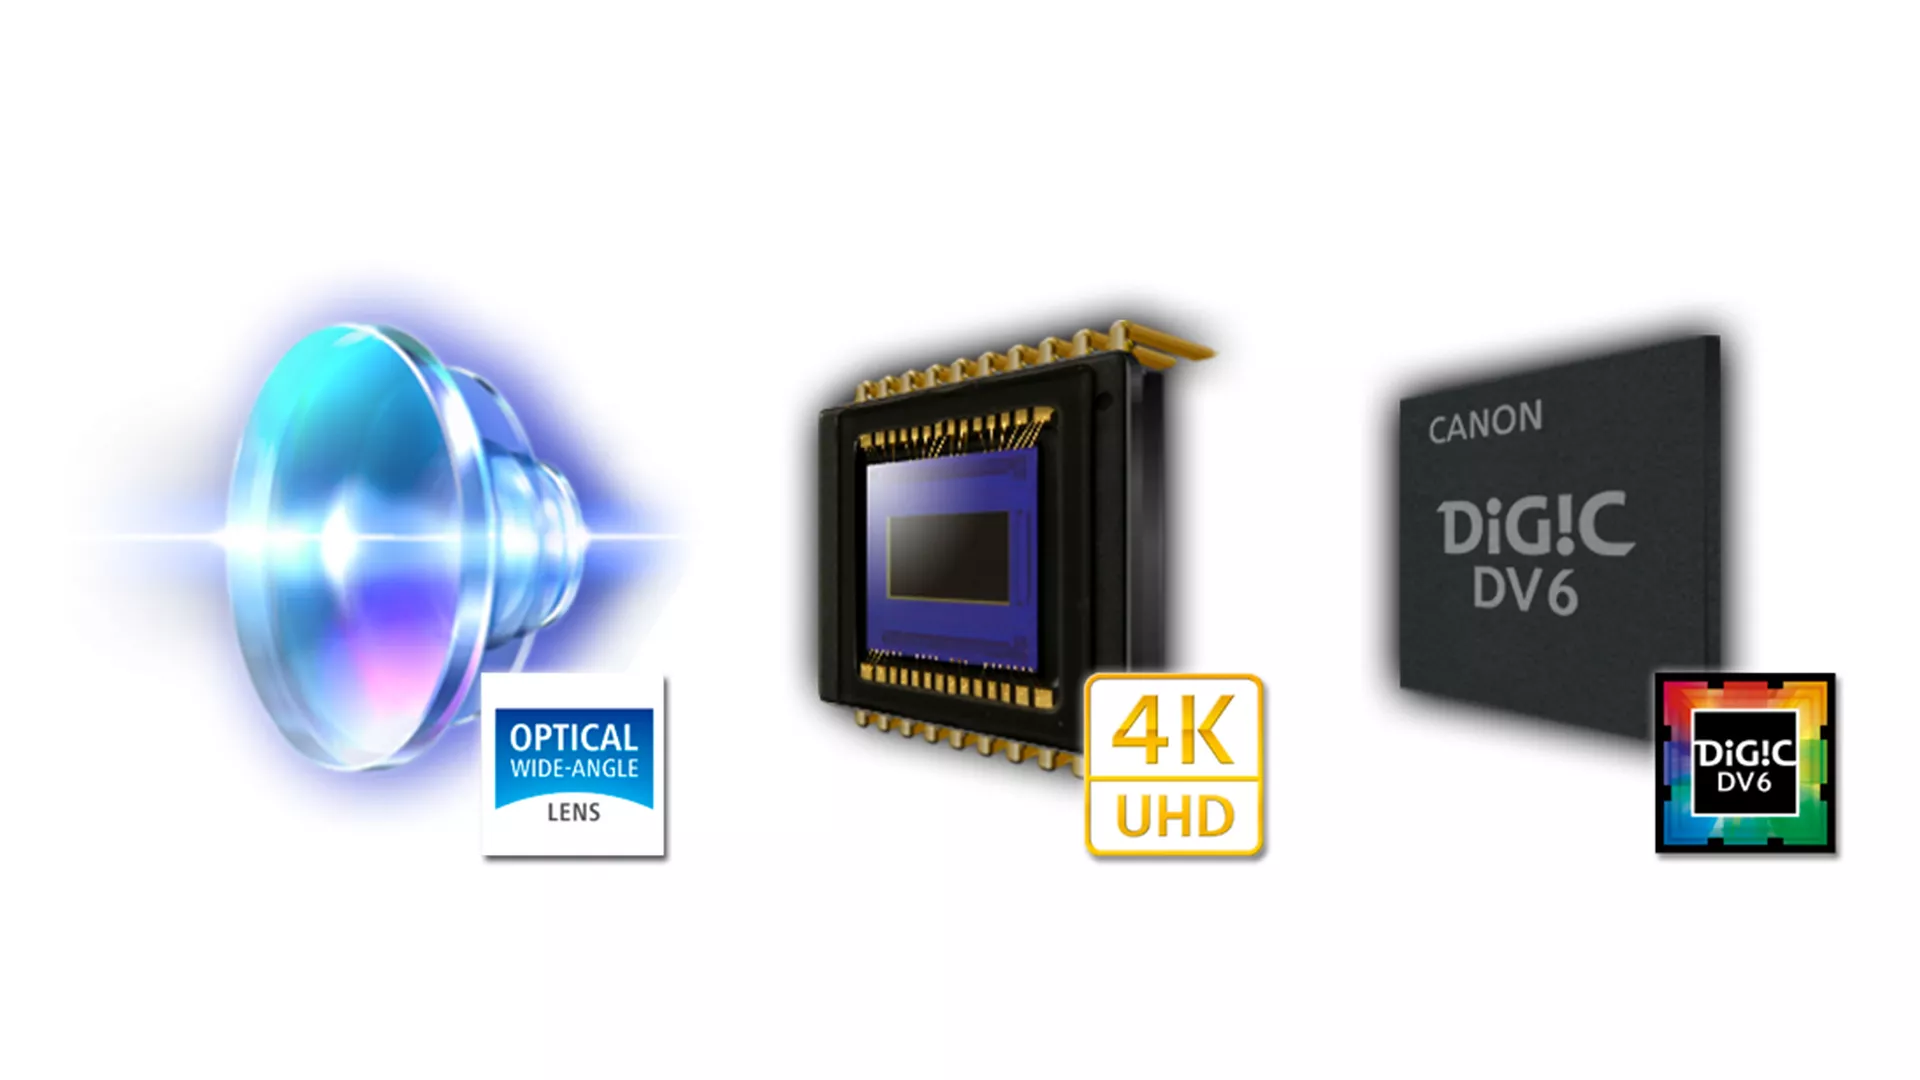 Zoom System, 4K Processor and DIGIC DV6 